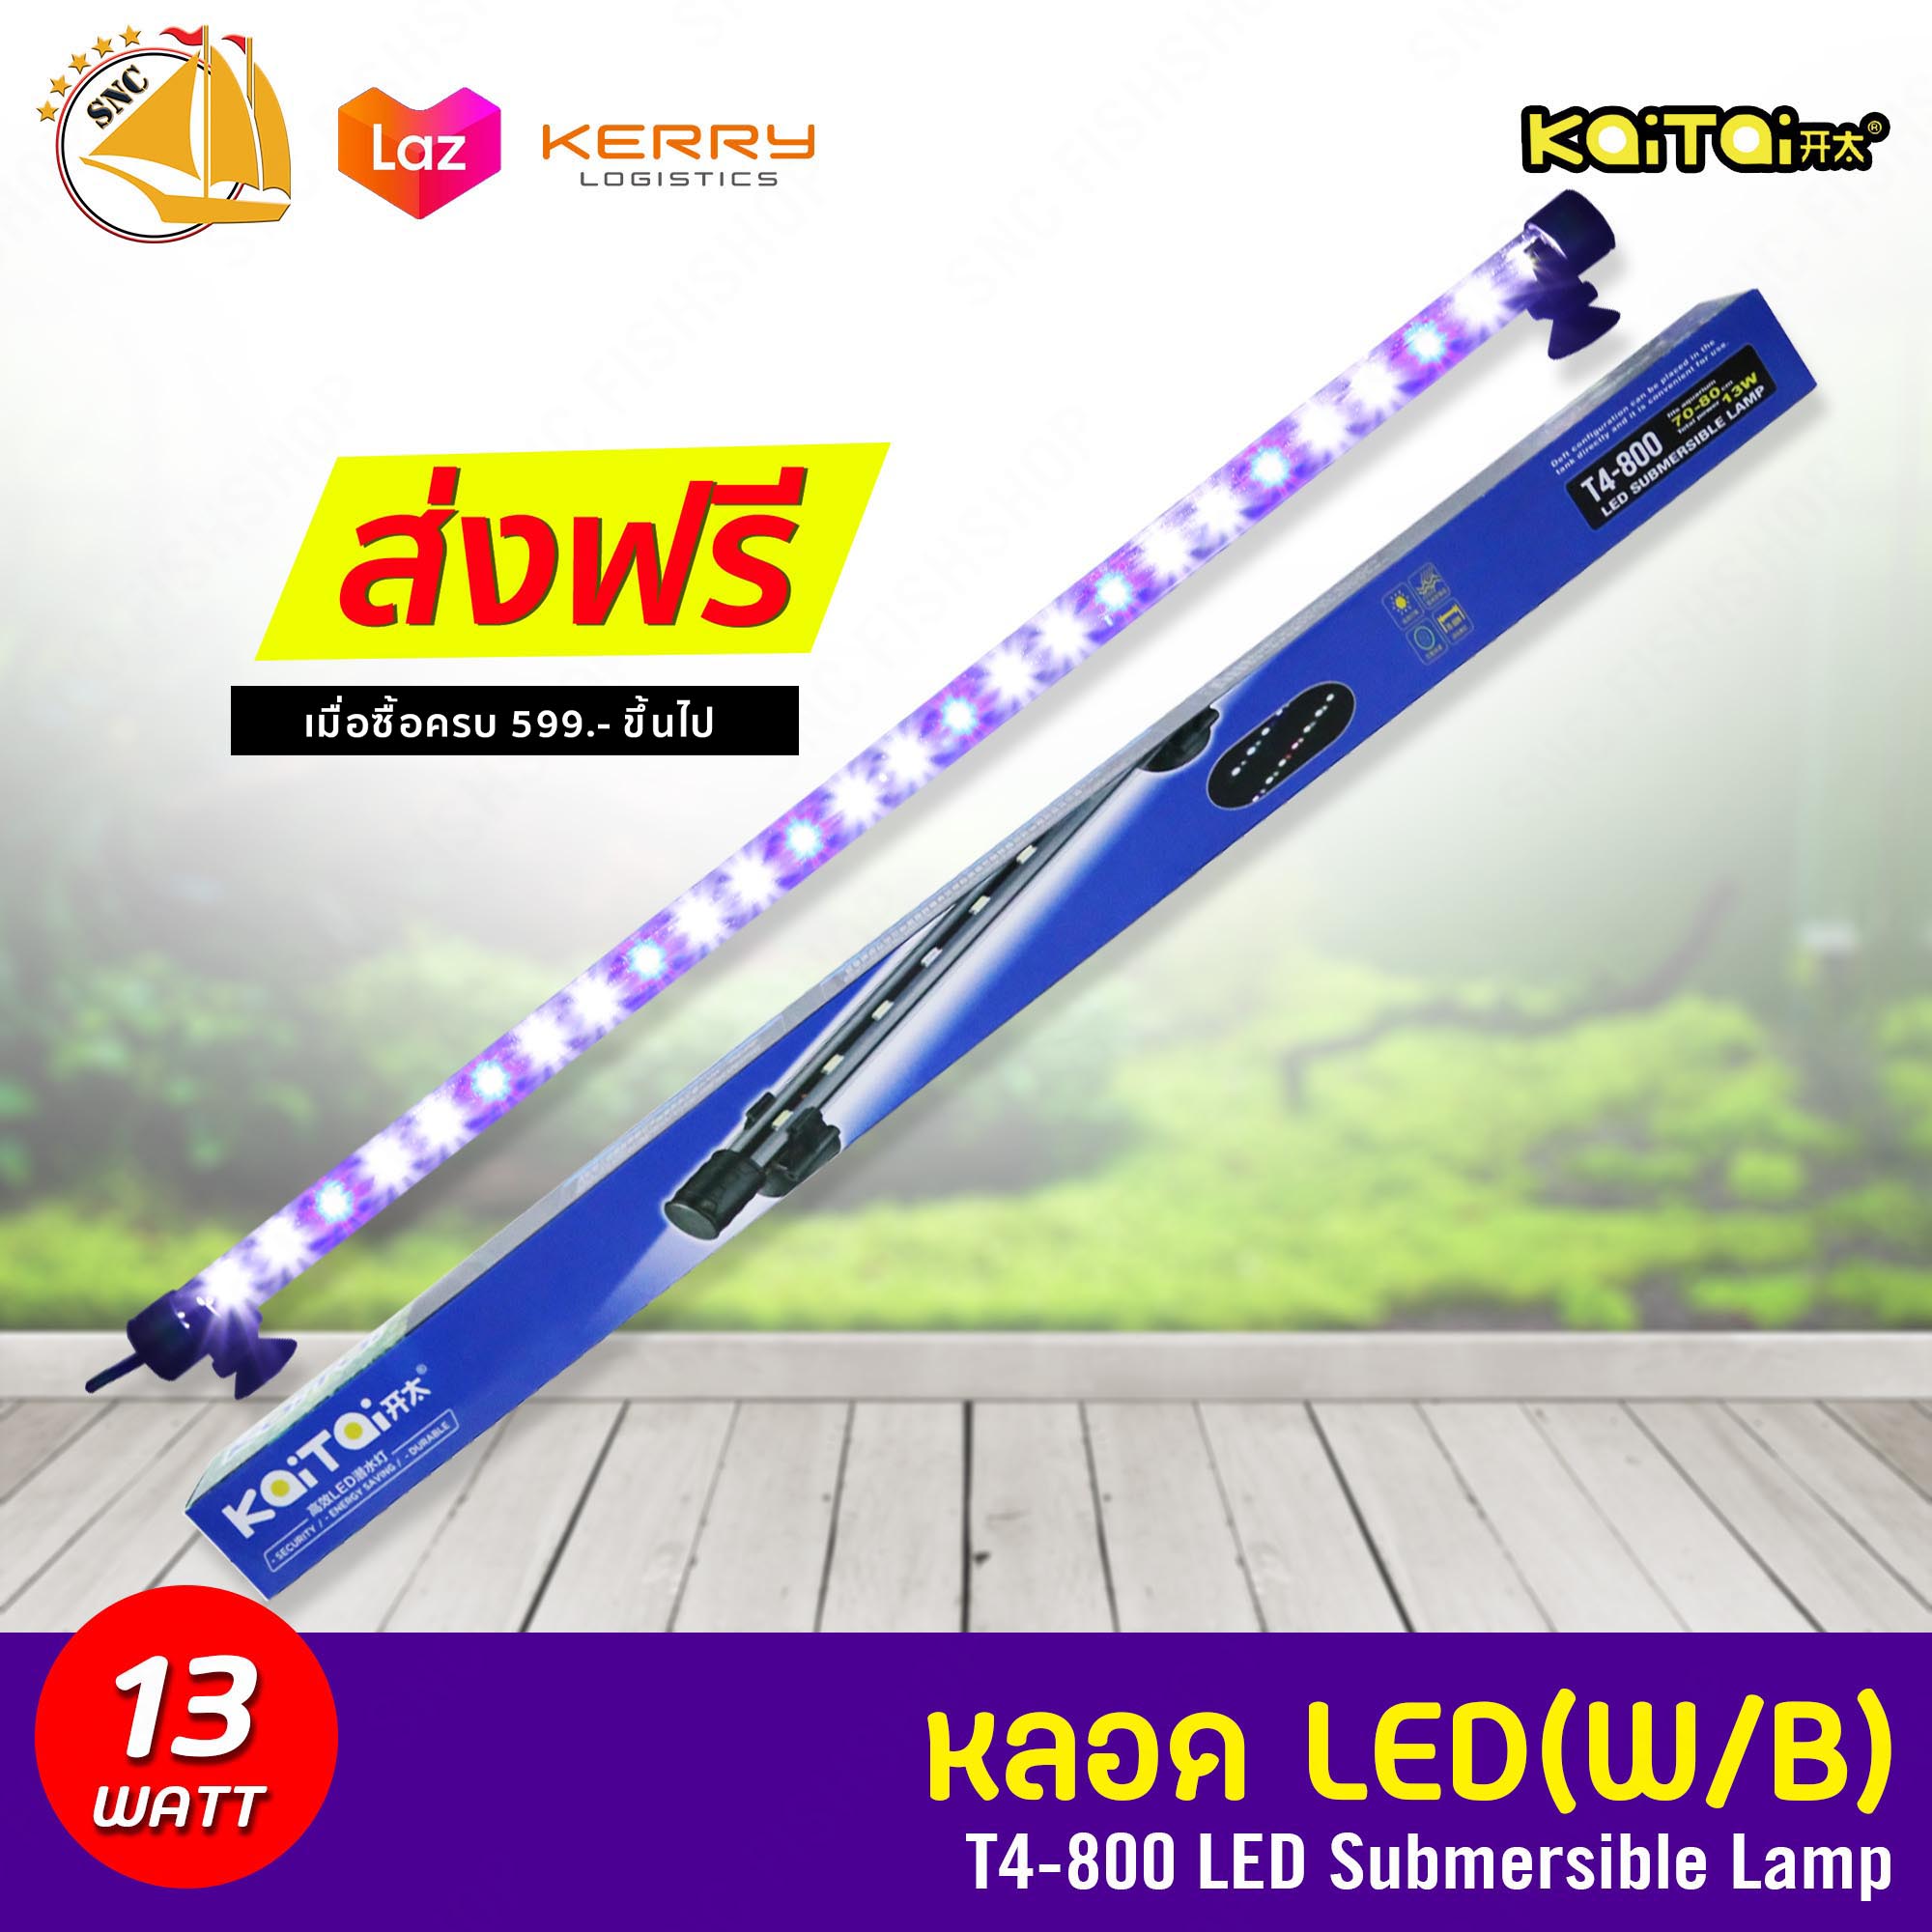 Kaitai LED Electronic Submerged Lamp T4-800 13W ไฟสีขาว-น้ำเงิน หลอดไฟใต้น้ำ